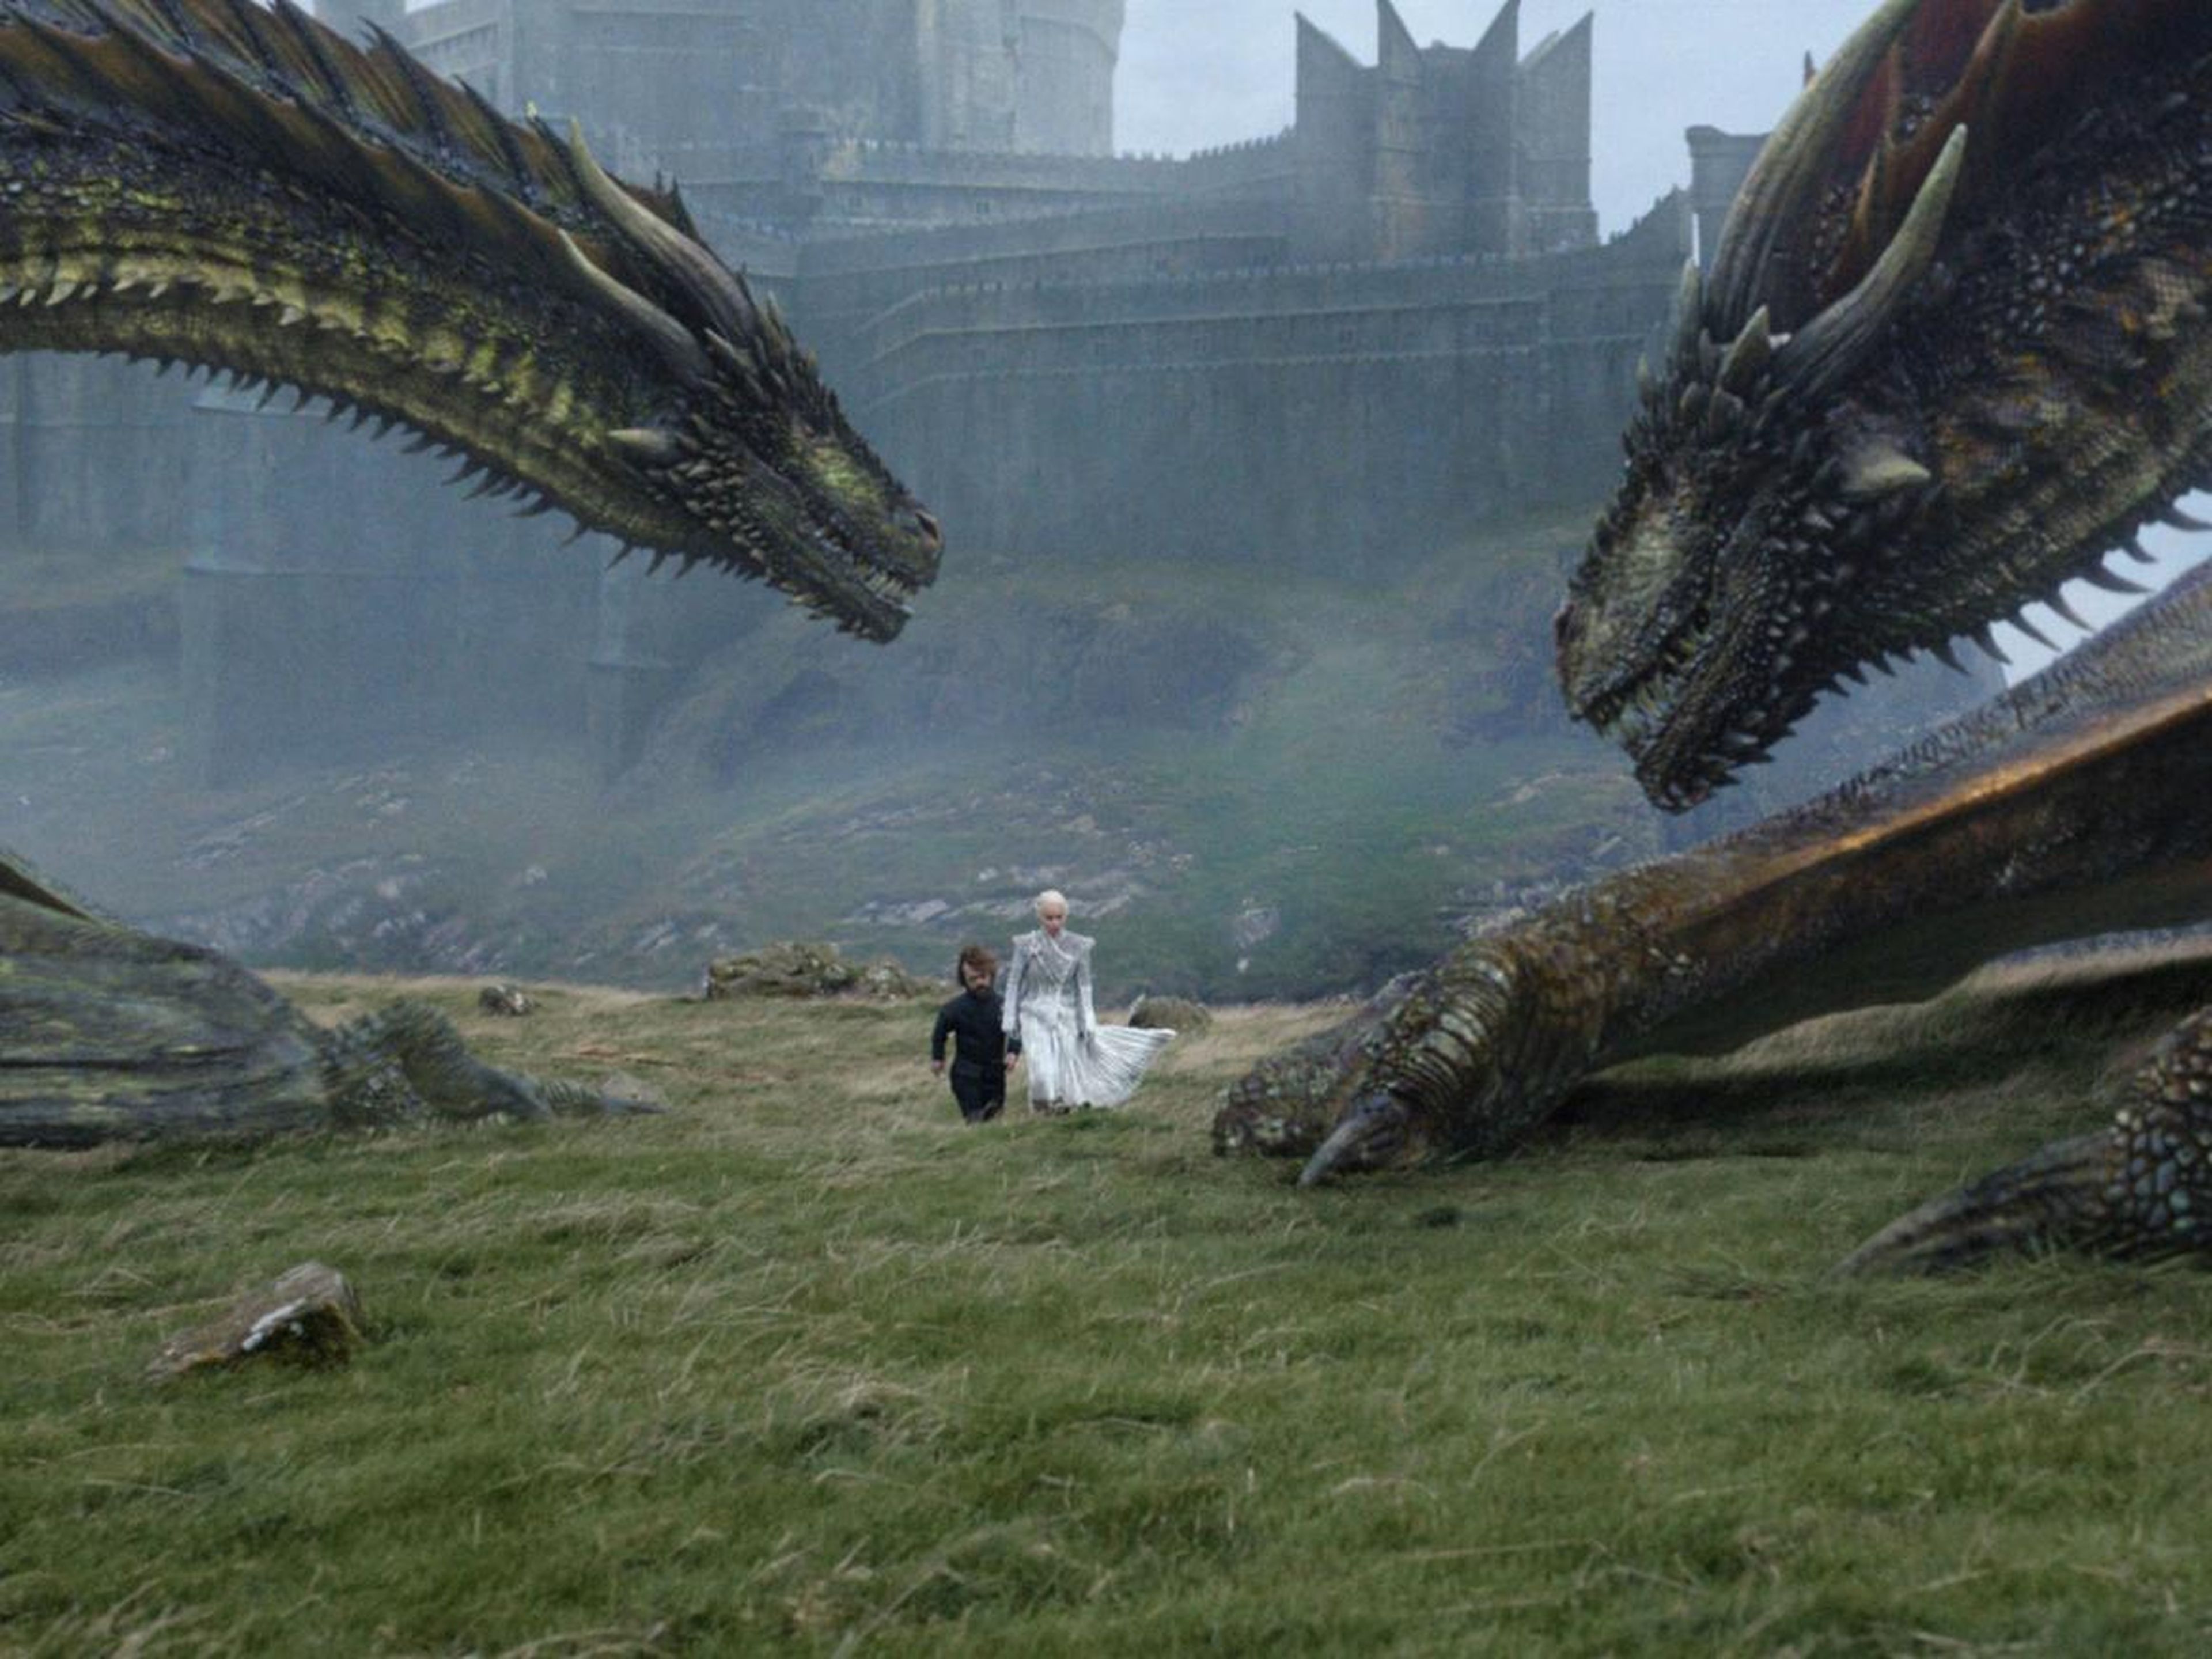 Daenerys lost one of her dragons, Viserion, last season.